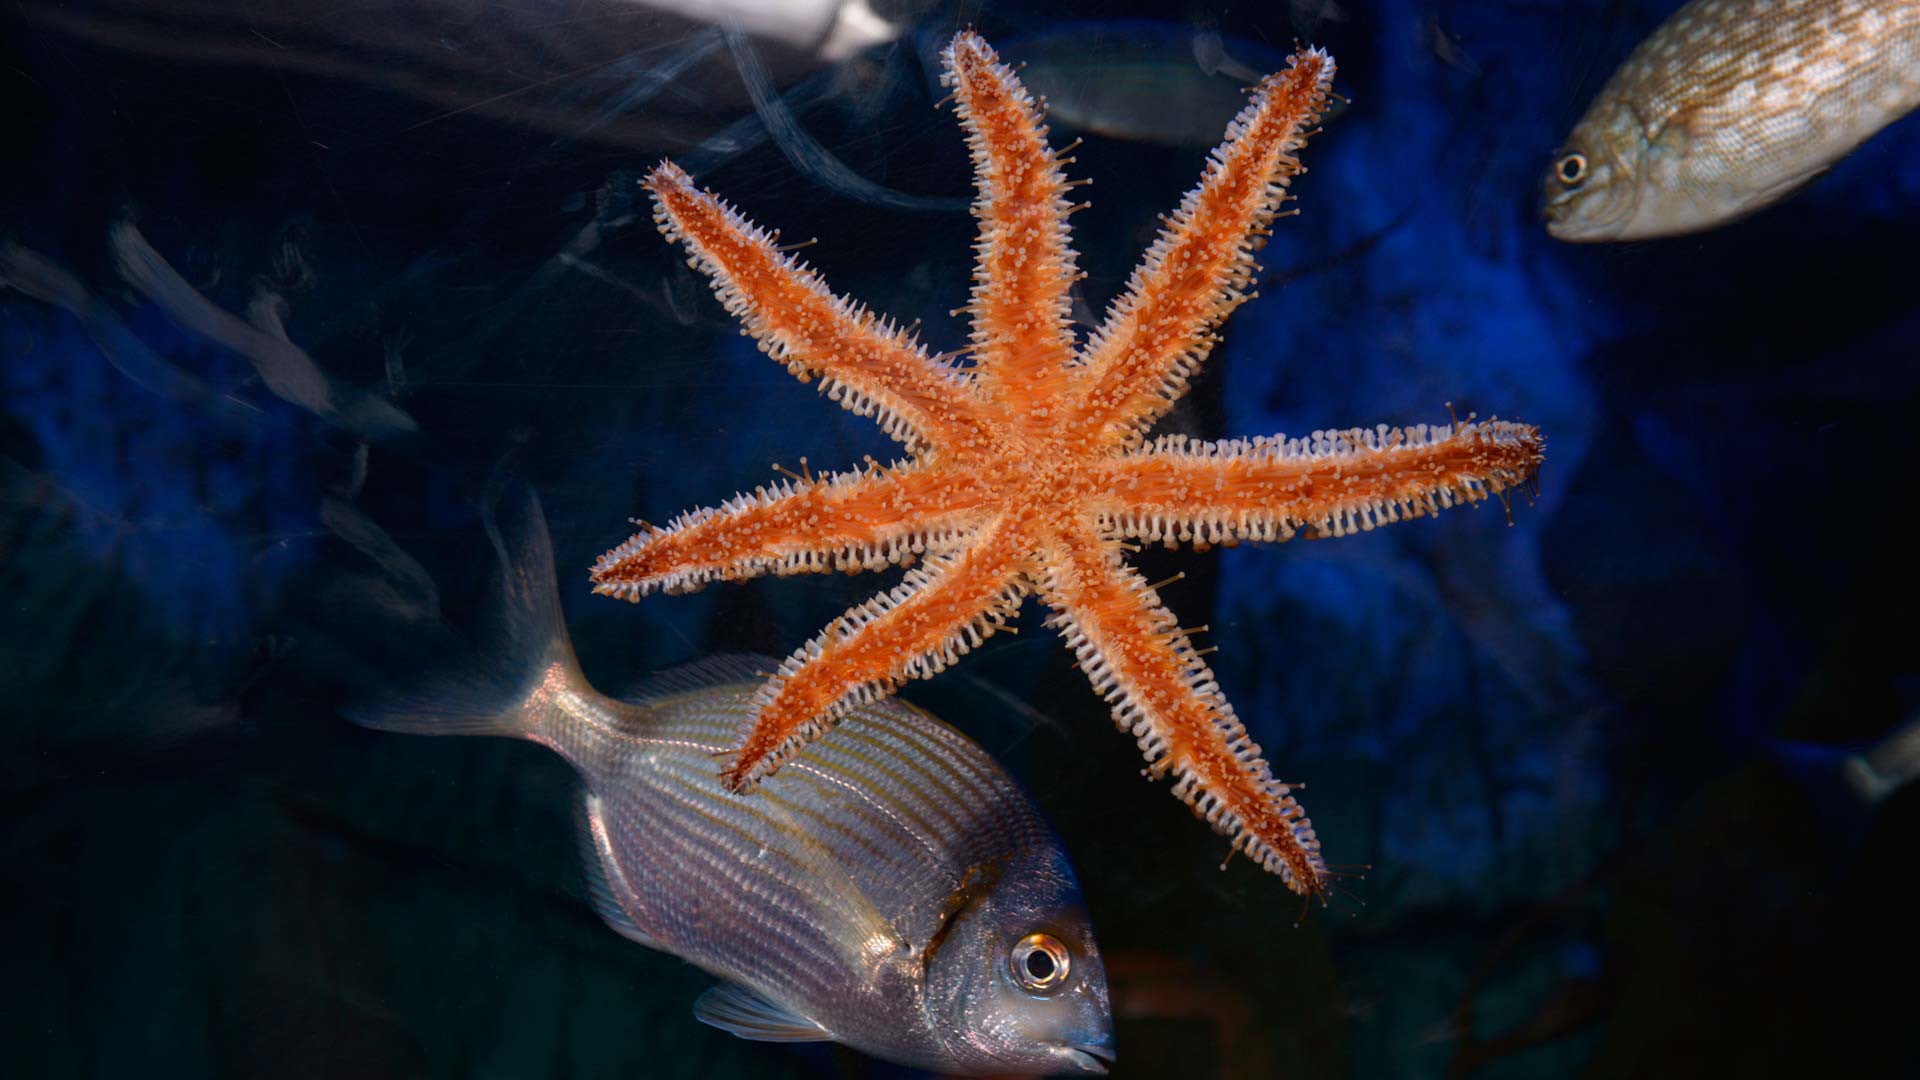 Blue spiny starfish